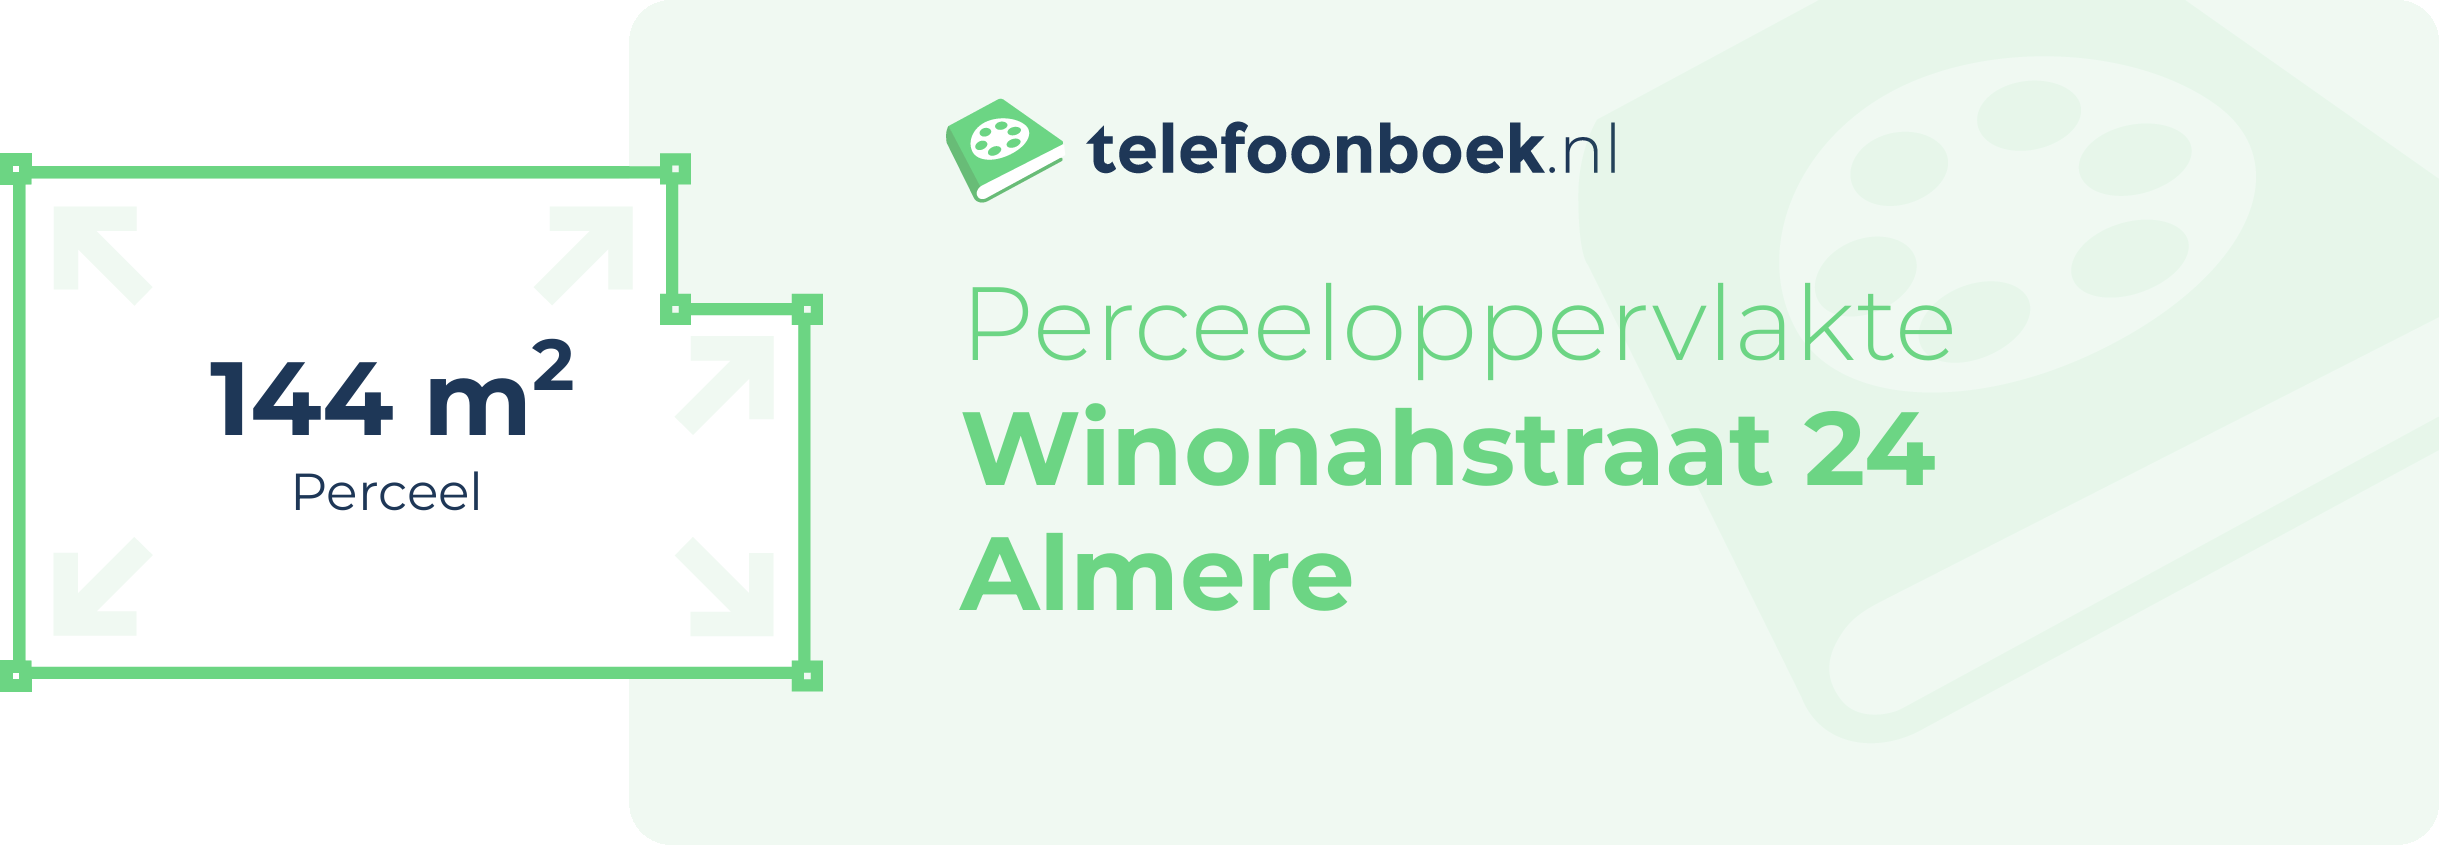 Perceeloppervlakte Winonahstraat 24 Almere